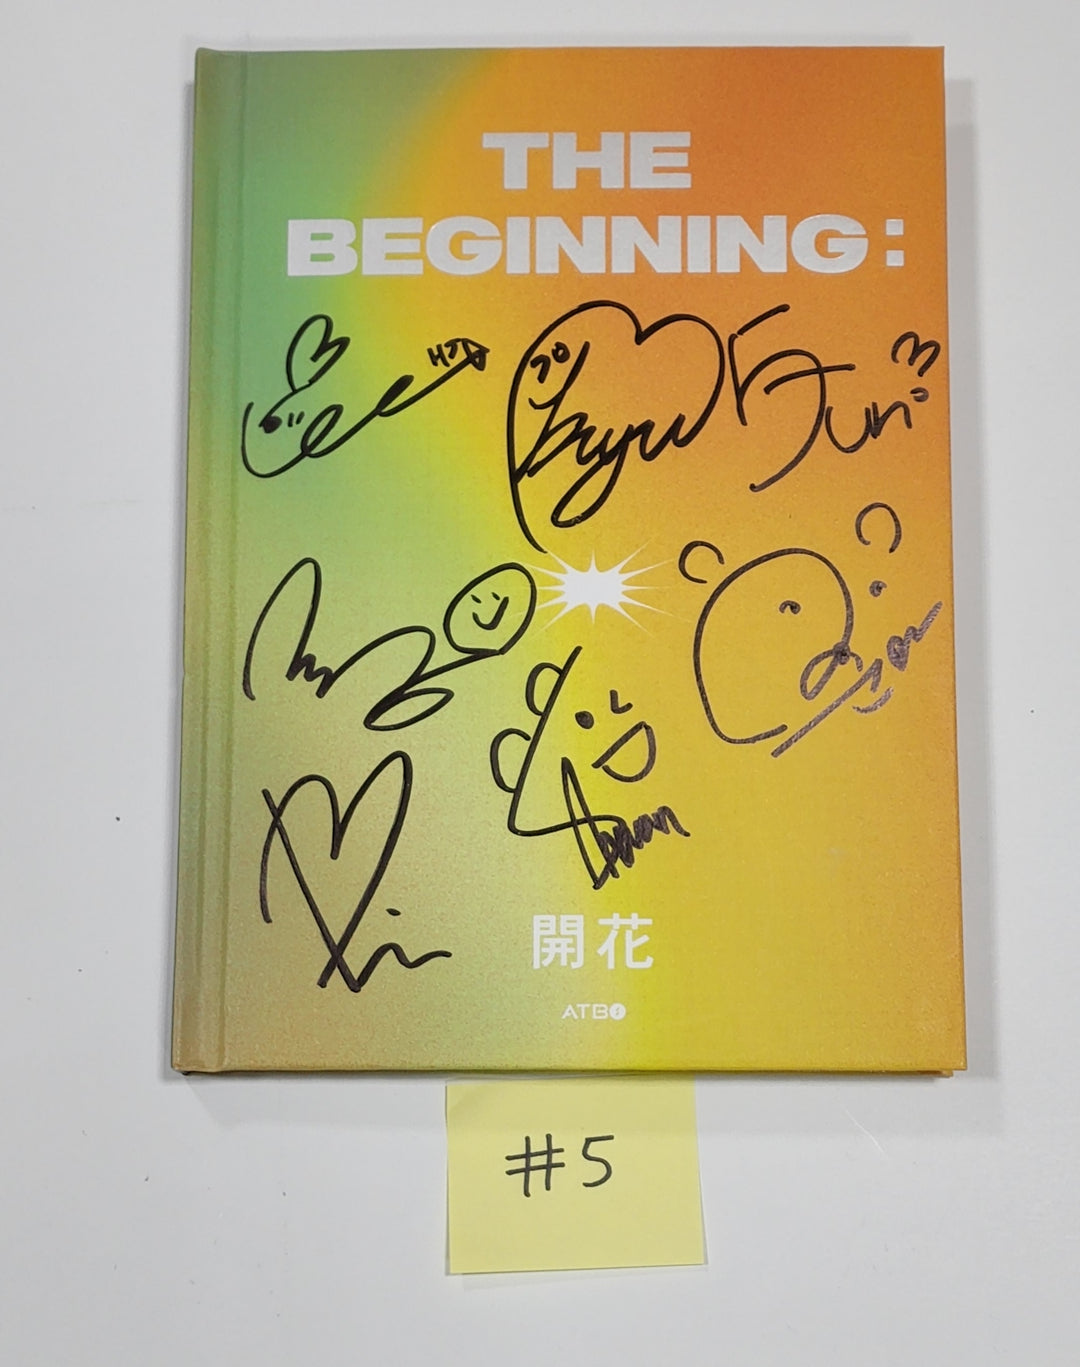 ATBO - 1st Mini Album "The Beginning : 開花" - Hand Autographed(Signed) Promo Album